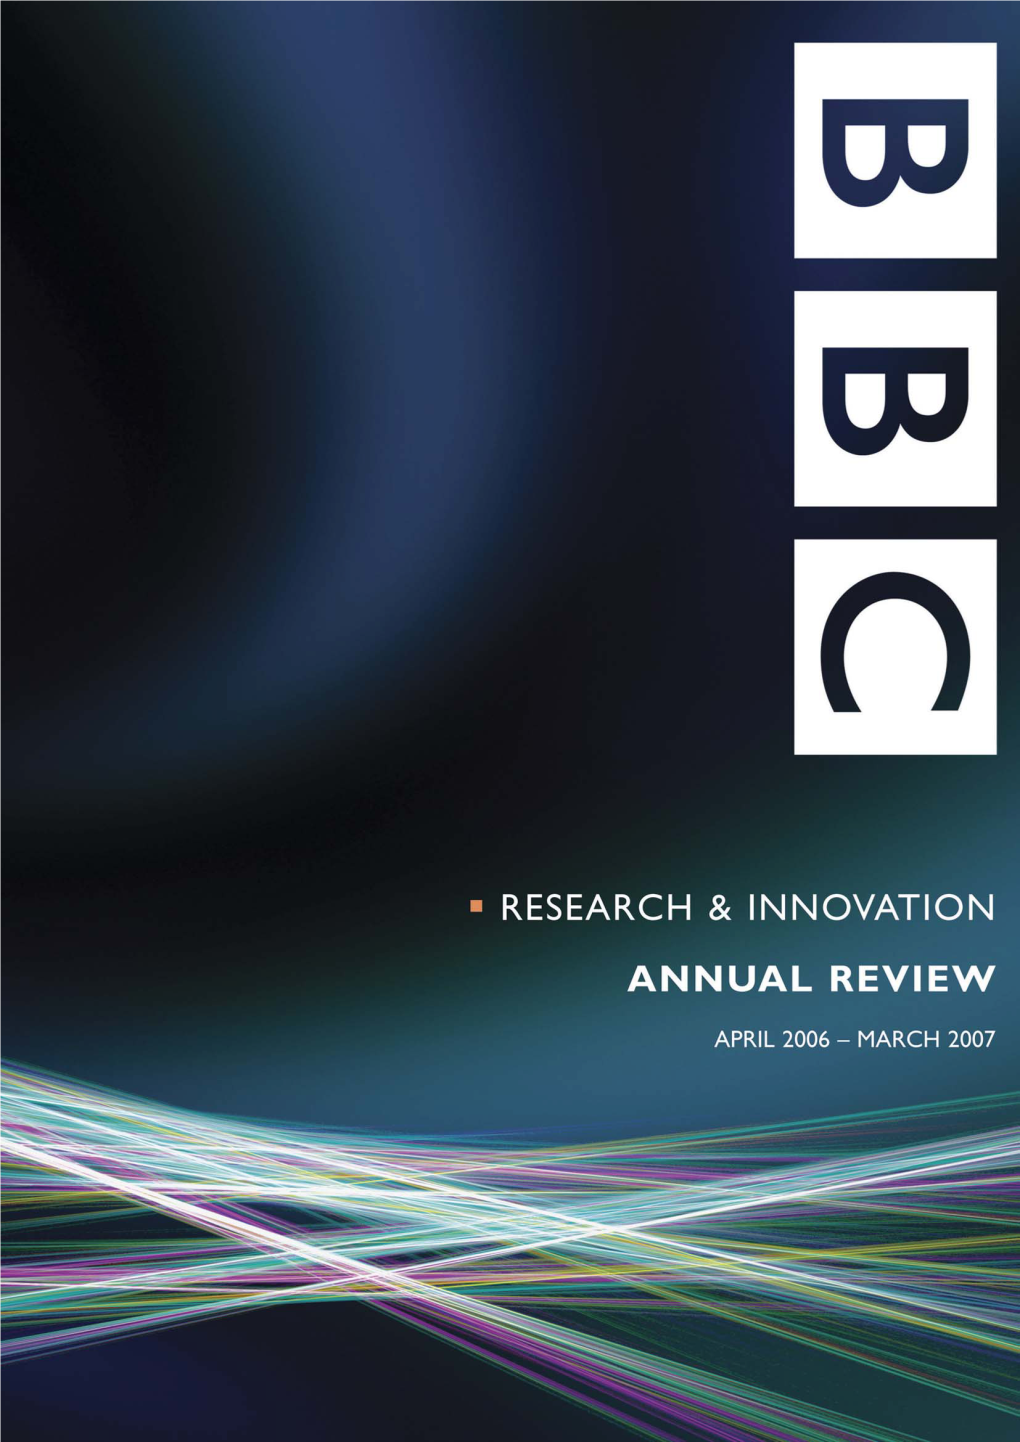 BBC R&D Annual Review 2006-2007